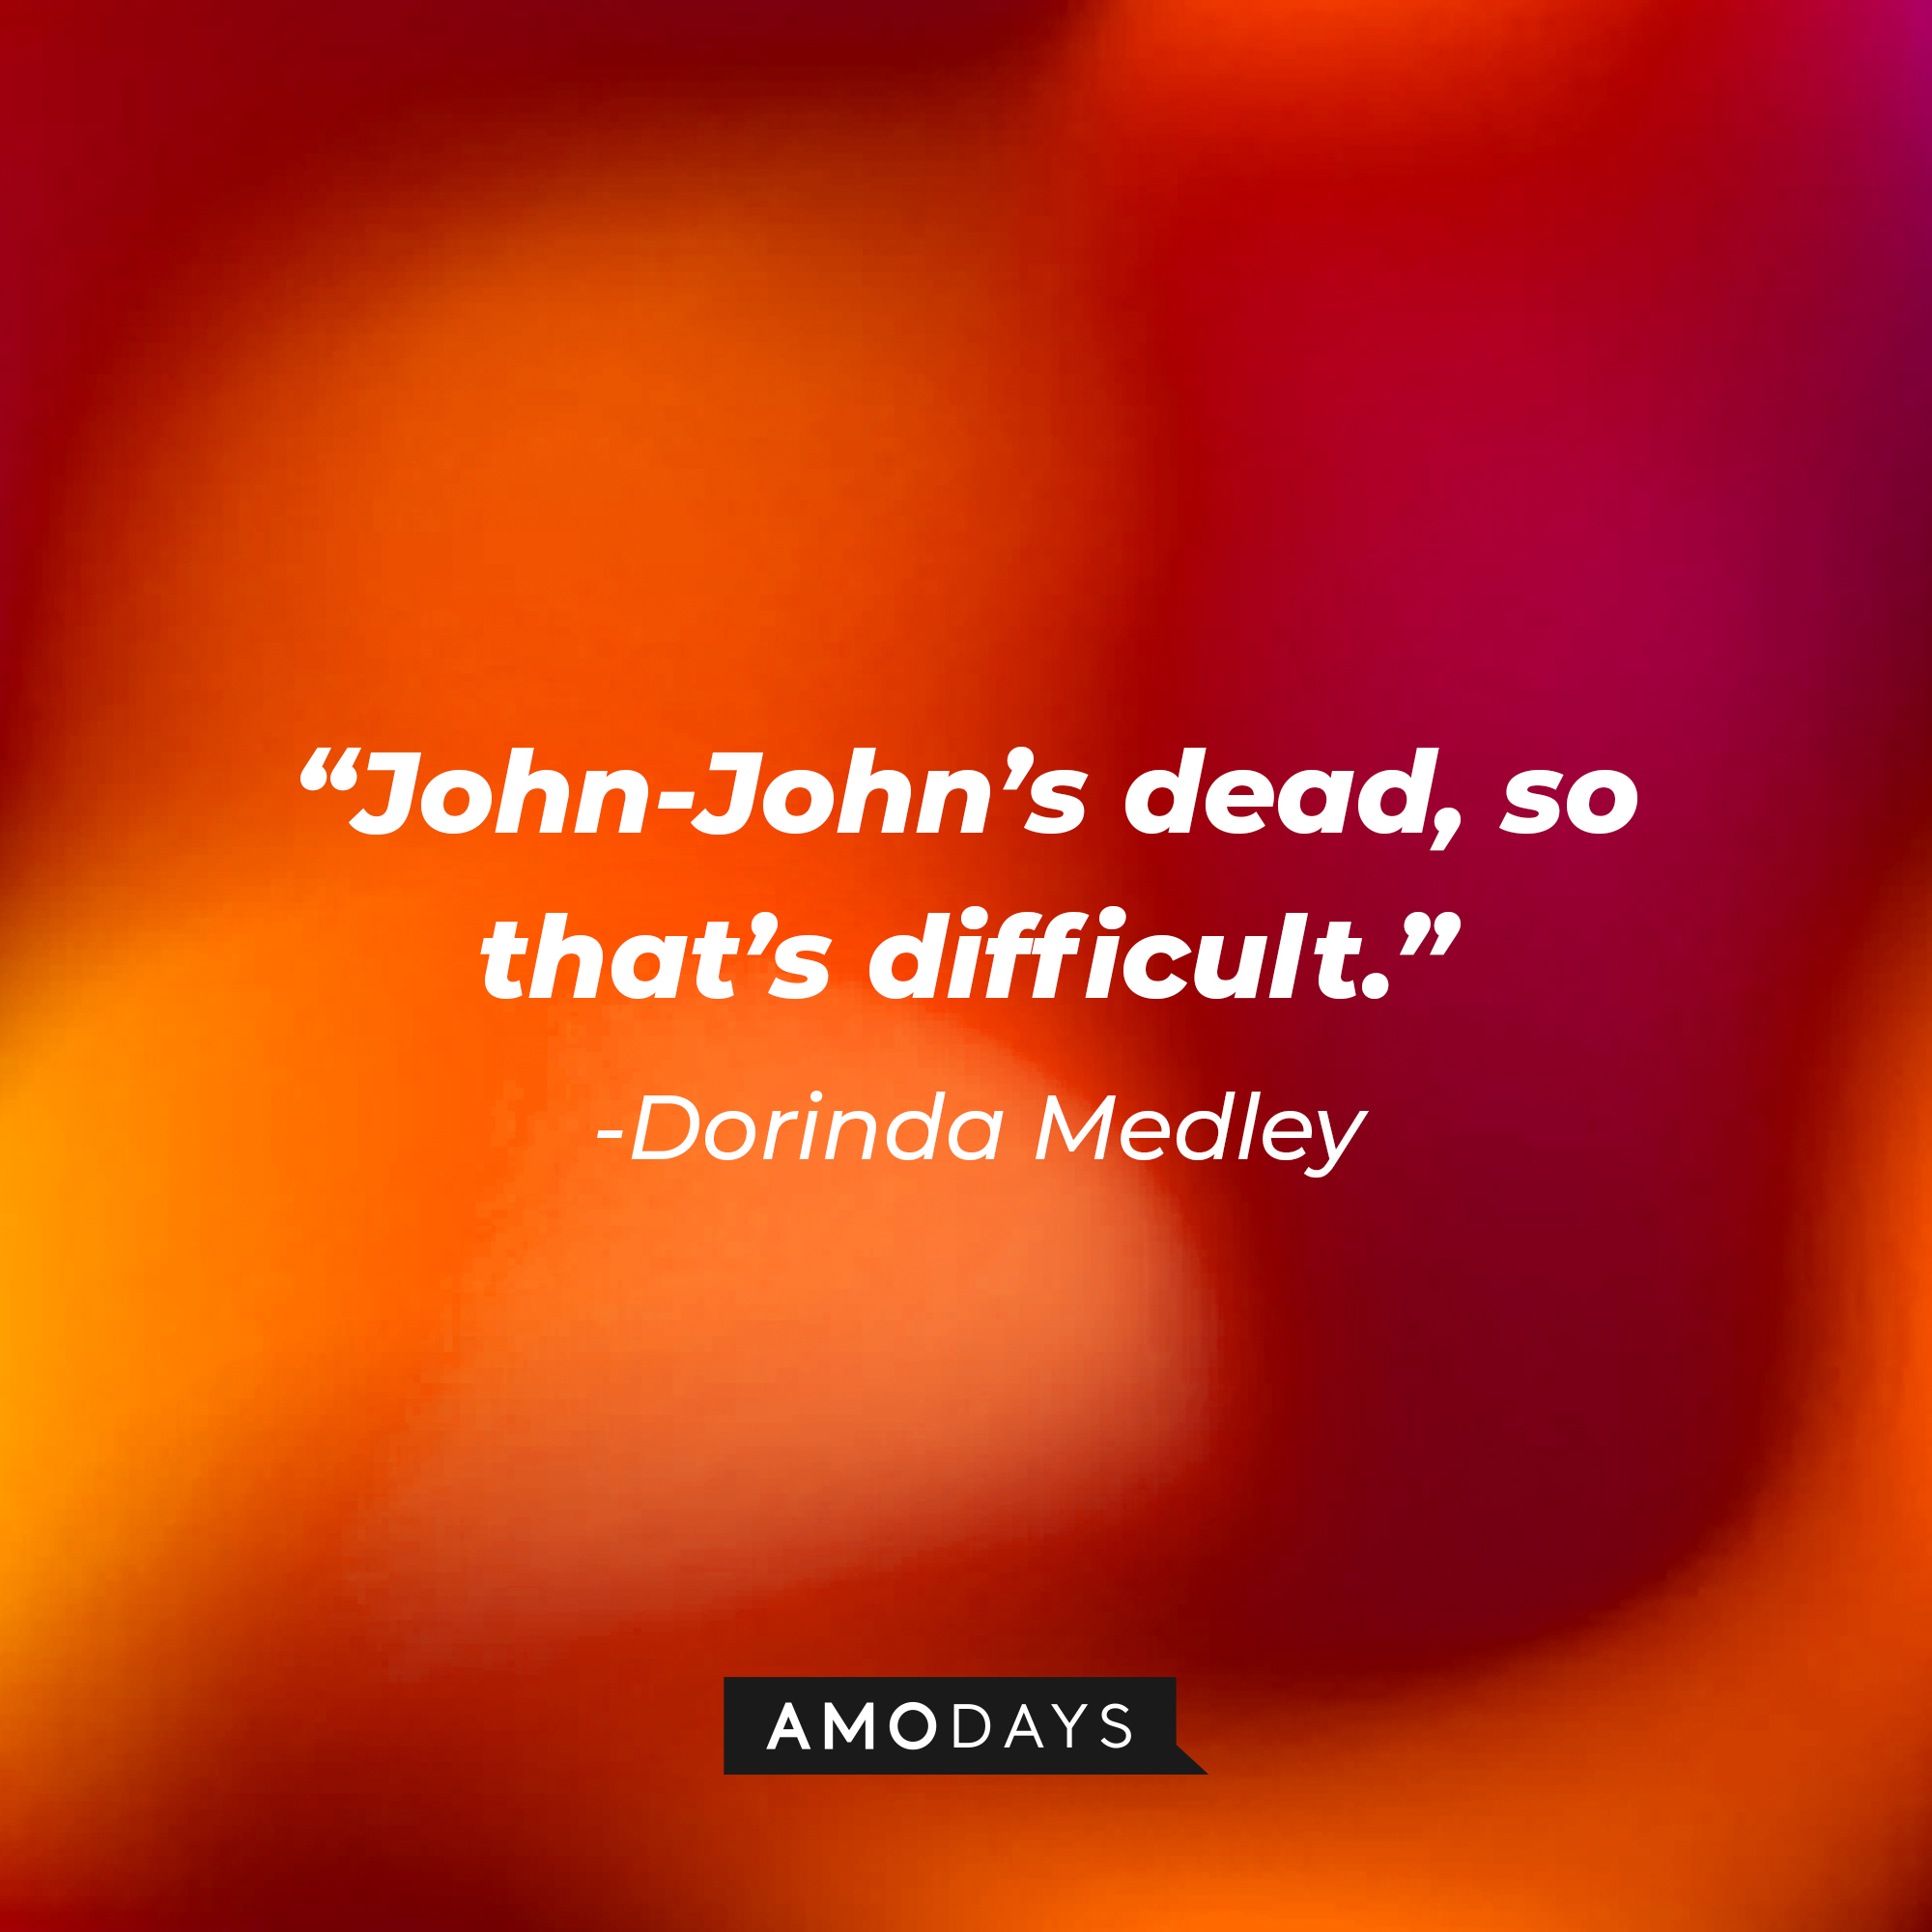 Dorinda Medley’s quote: “John-John’s dead so that’s difficult.” | Source: AmoDays